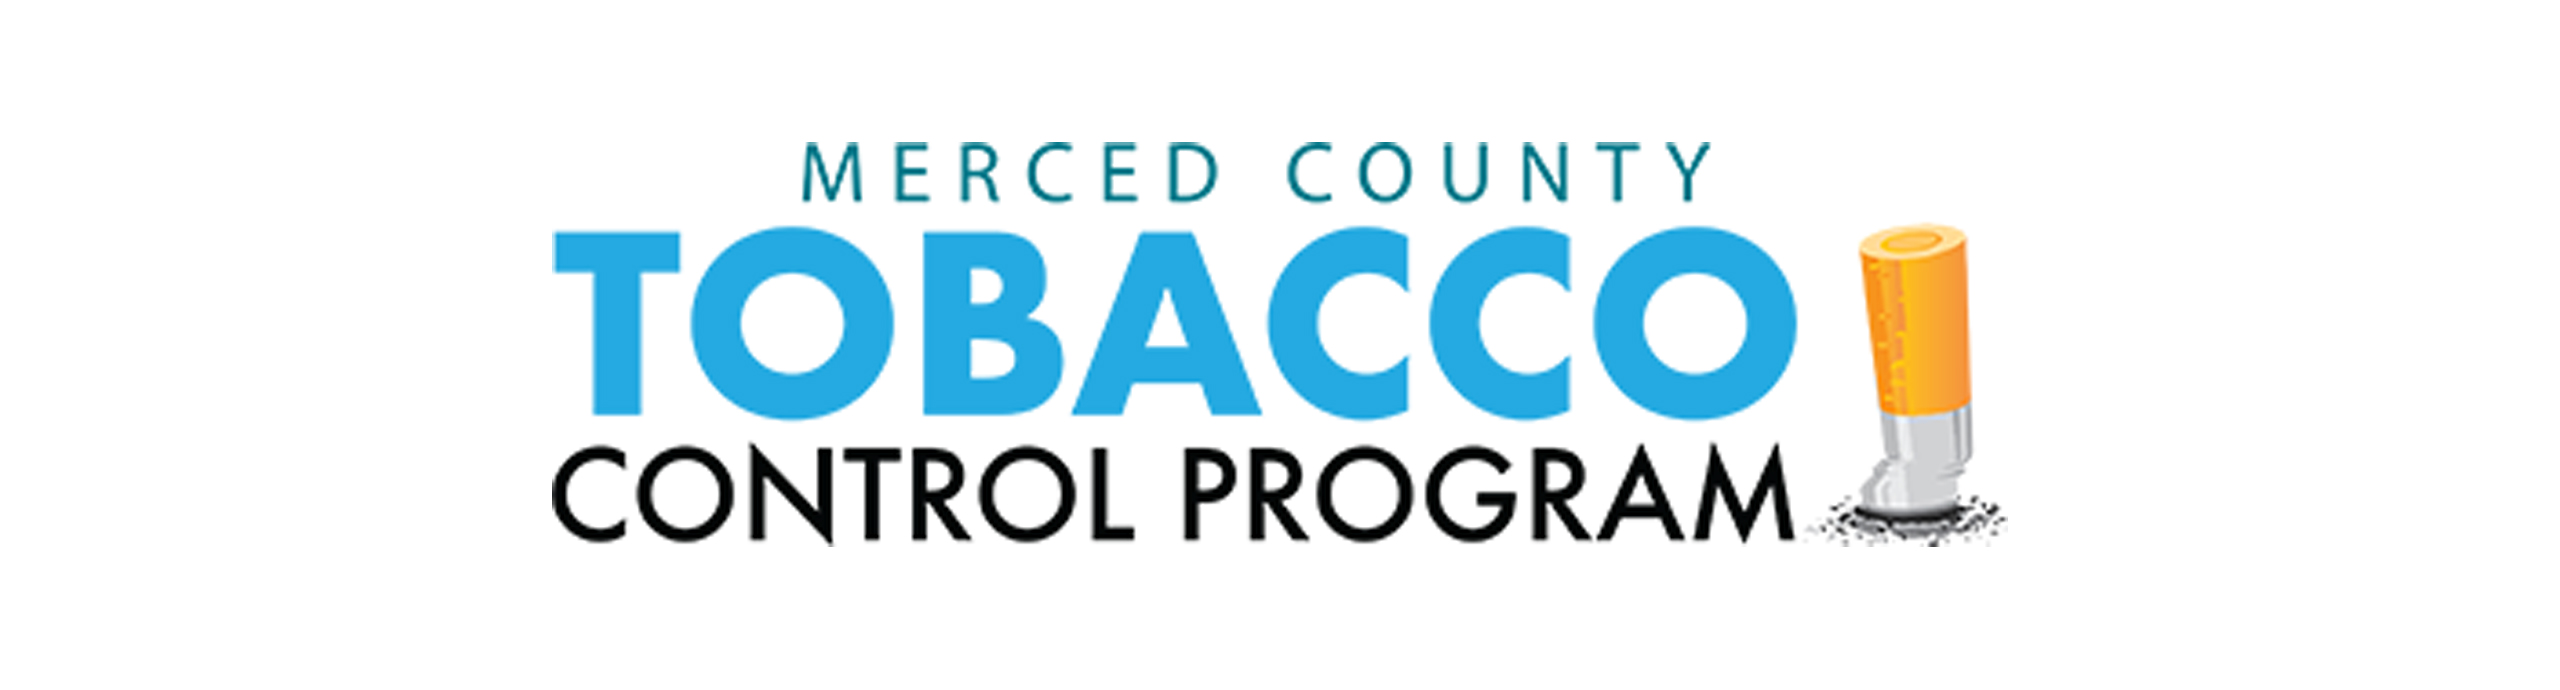 Merced County Tobacco Control Program